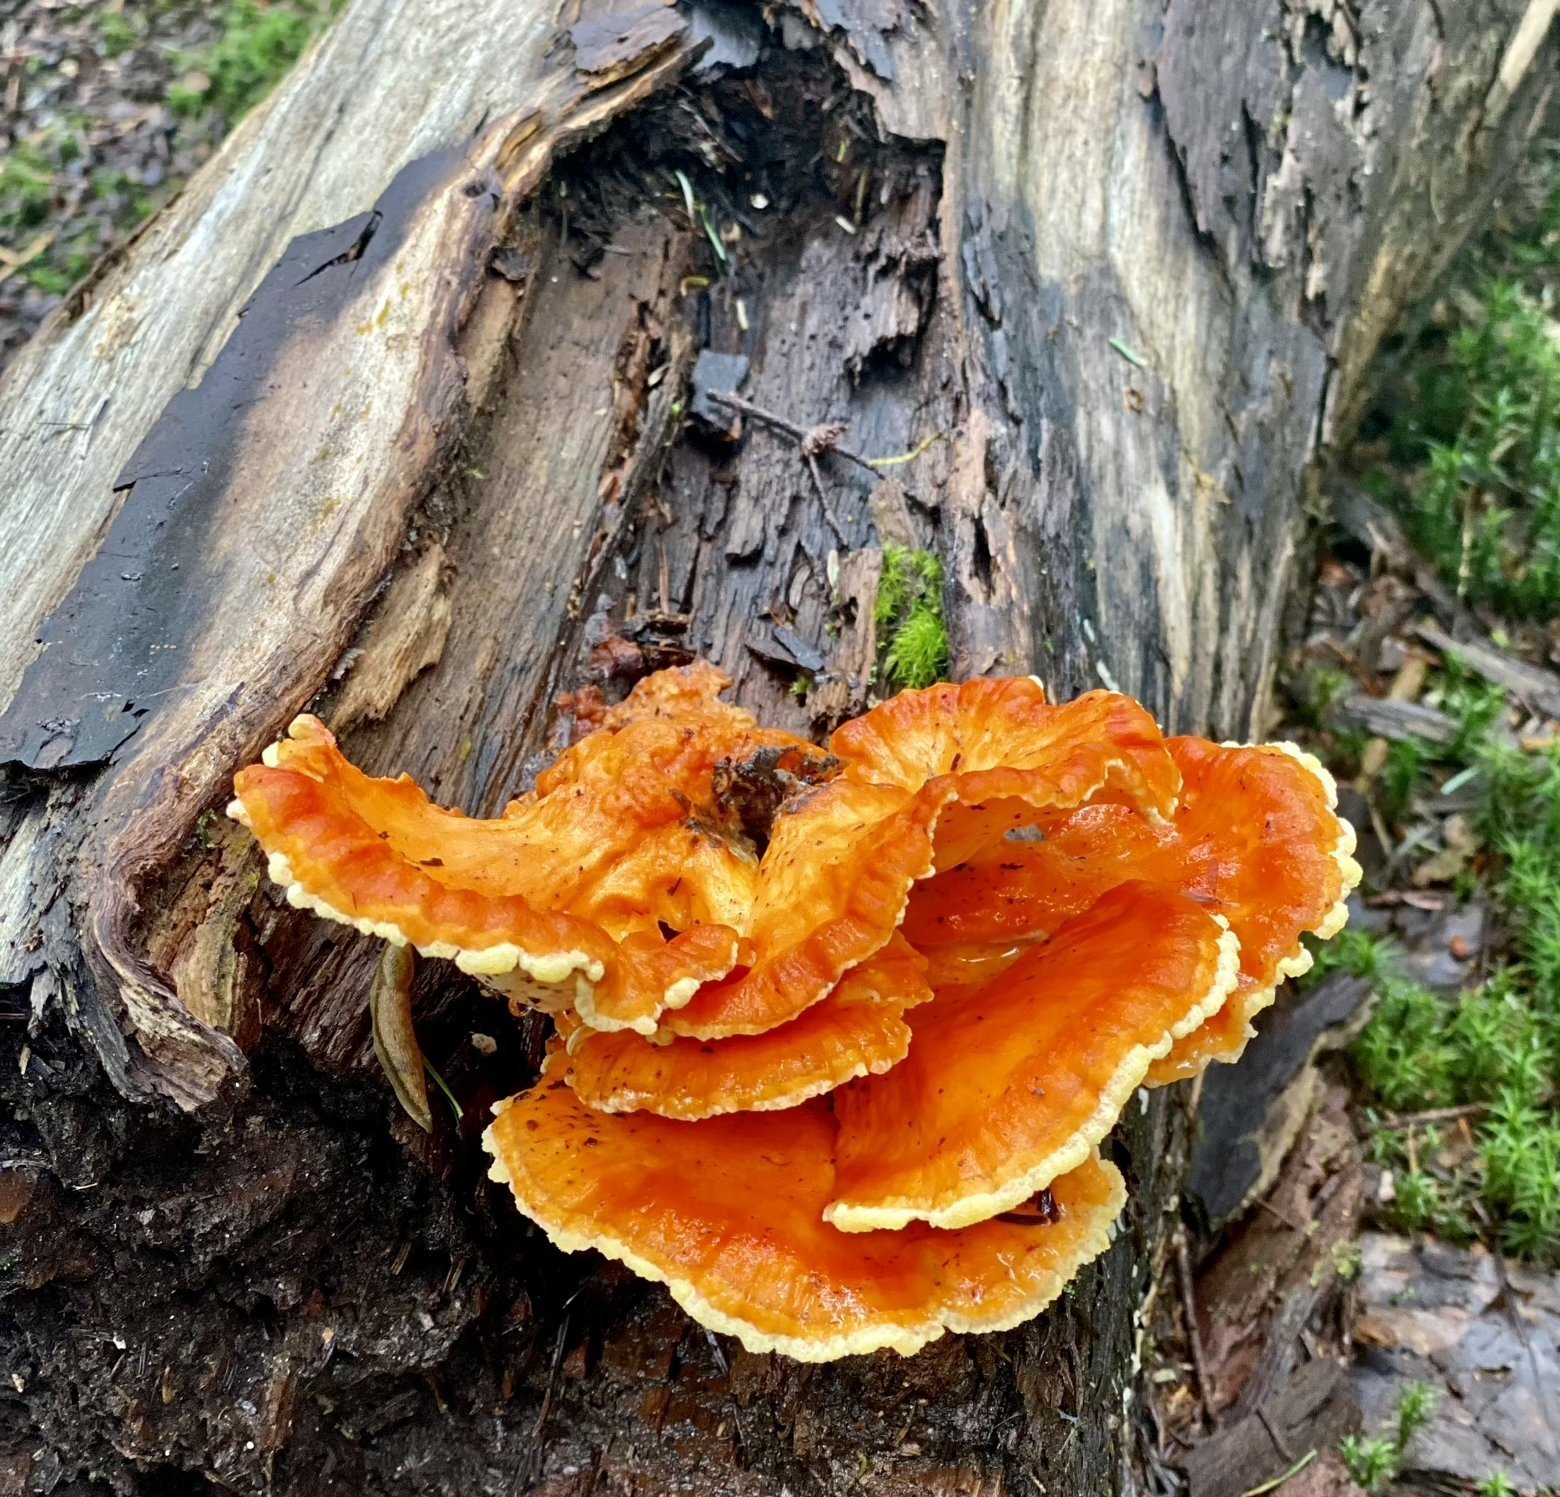 Flamboyant fungi